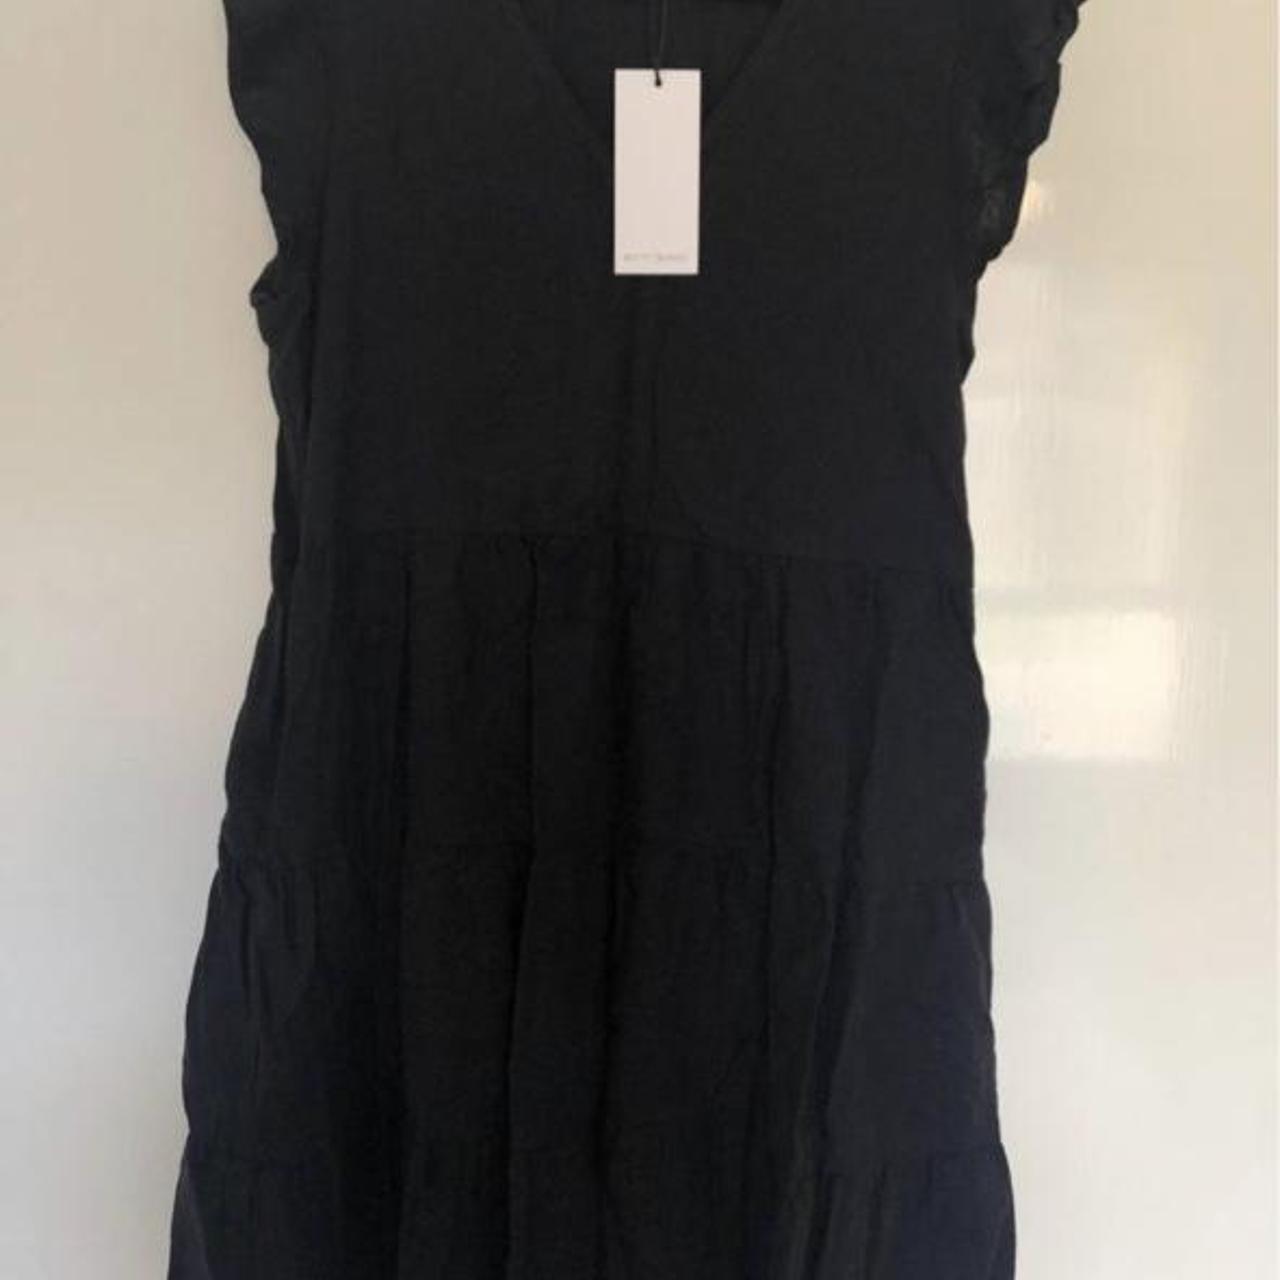 Dark grey linen dress Brand new size 12 paid $70 - Depop